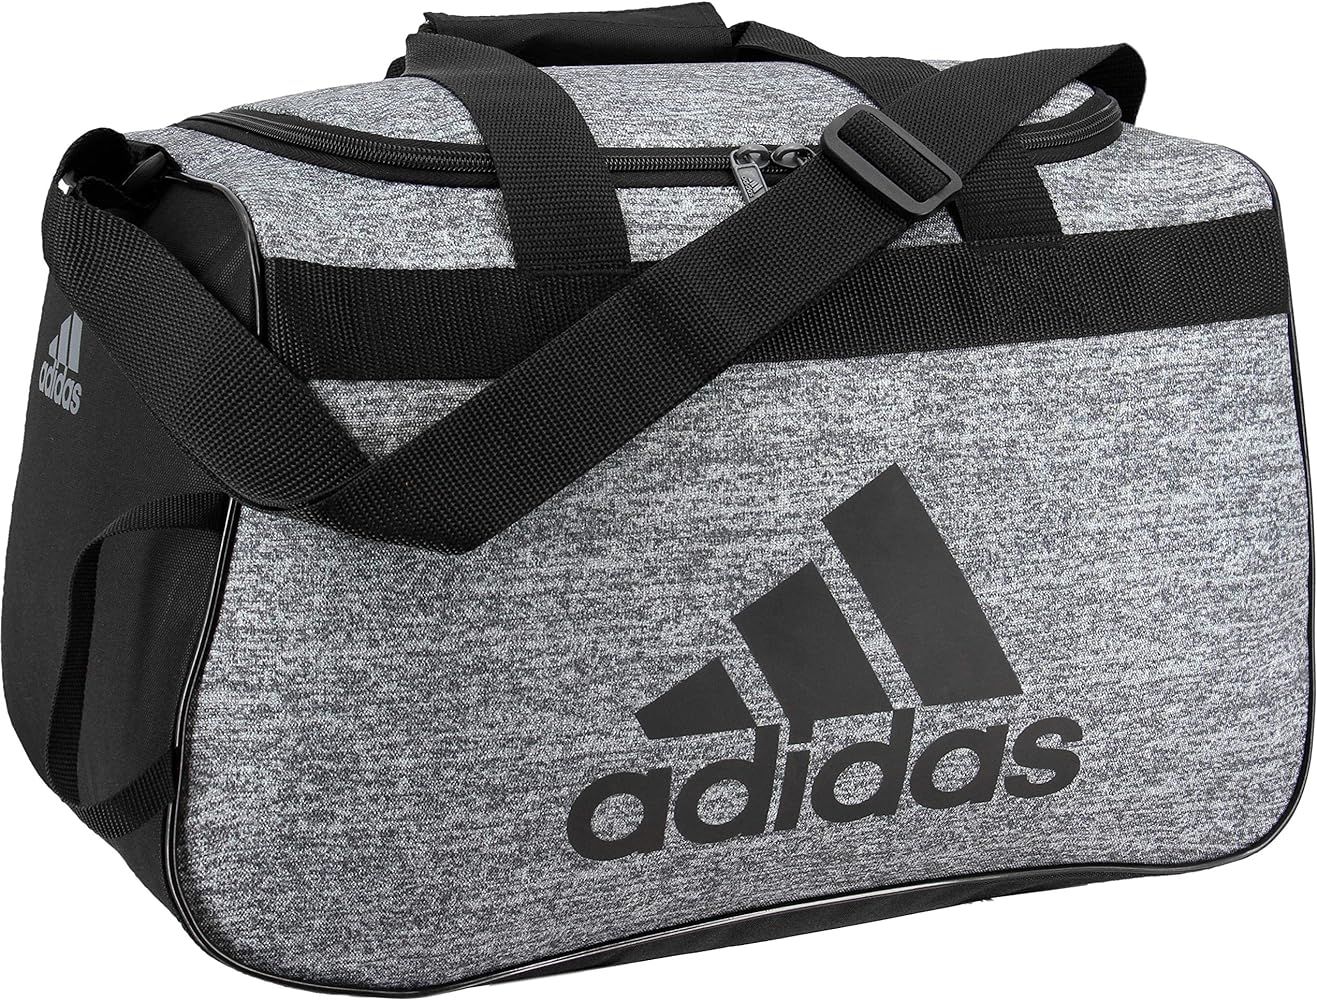 adidas Diablo Small Duffel Bag | Amazon (US)